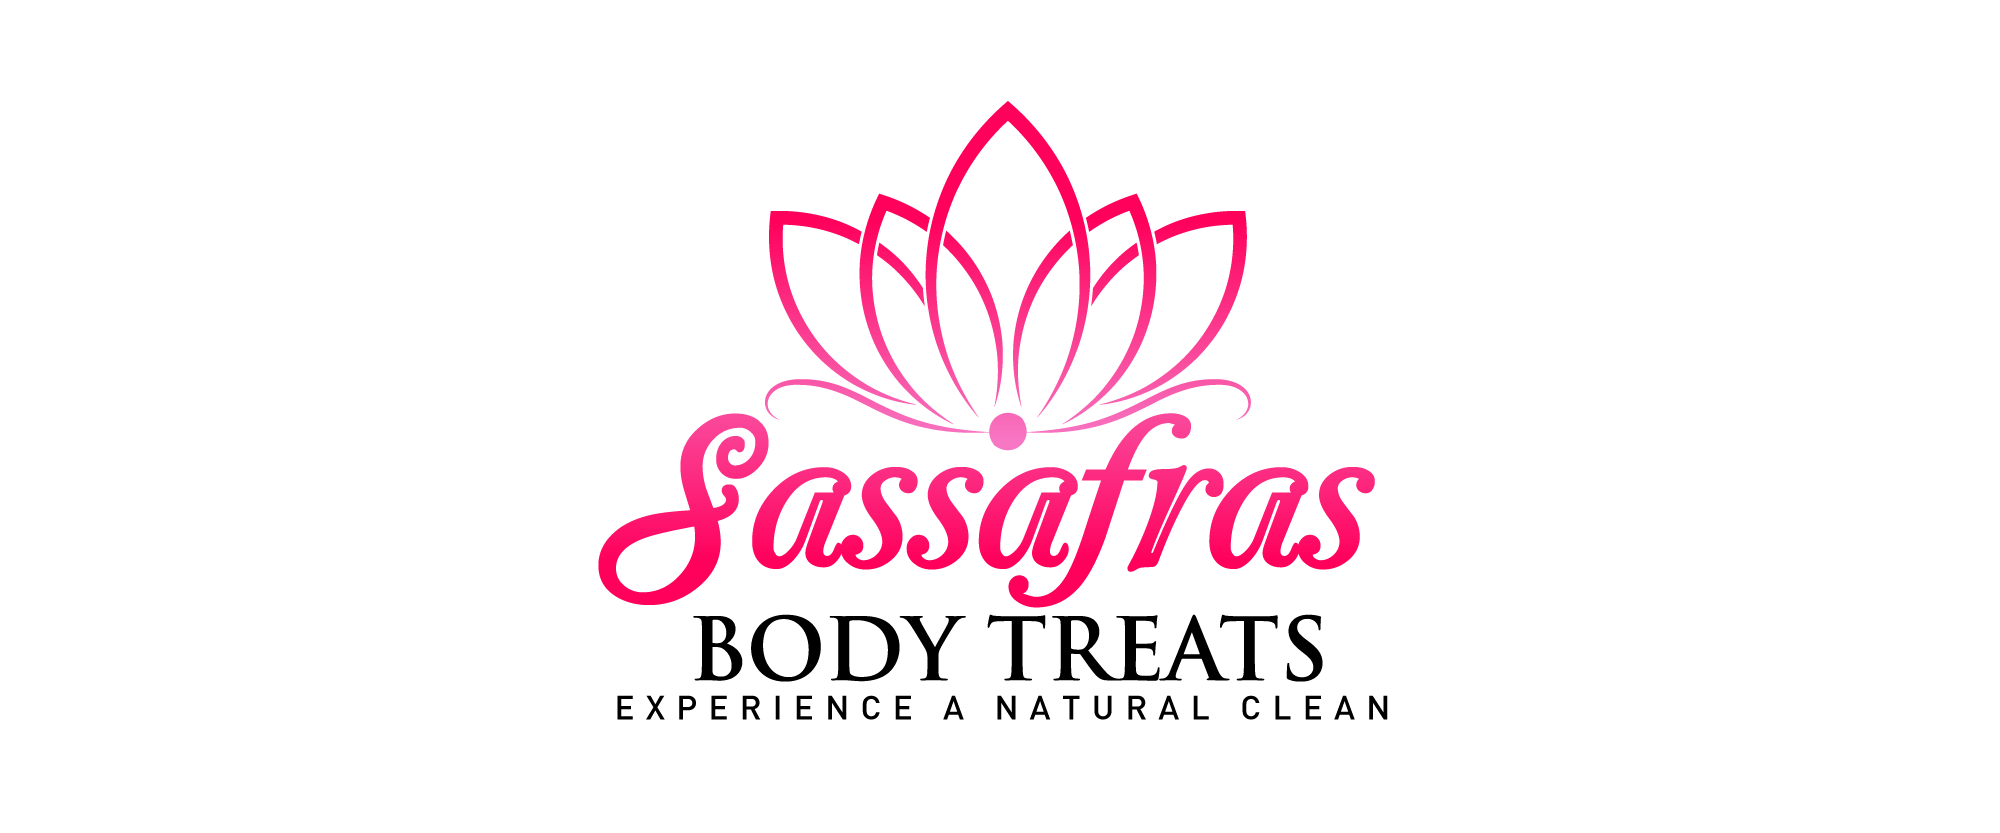 Sassafras Body Treats trasparent image.png